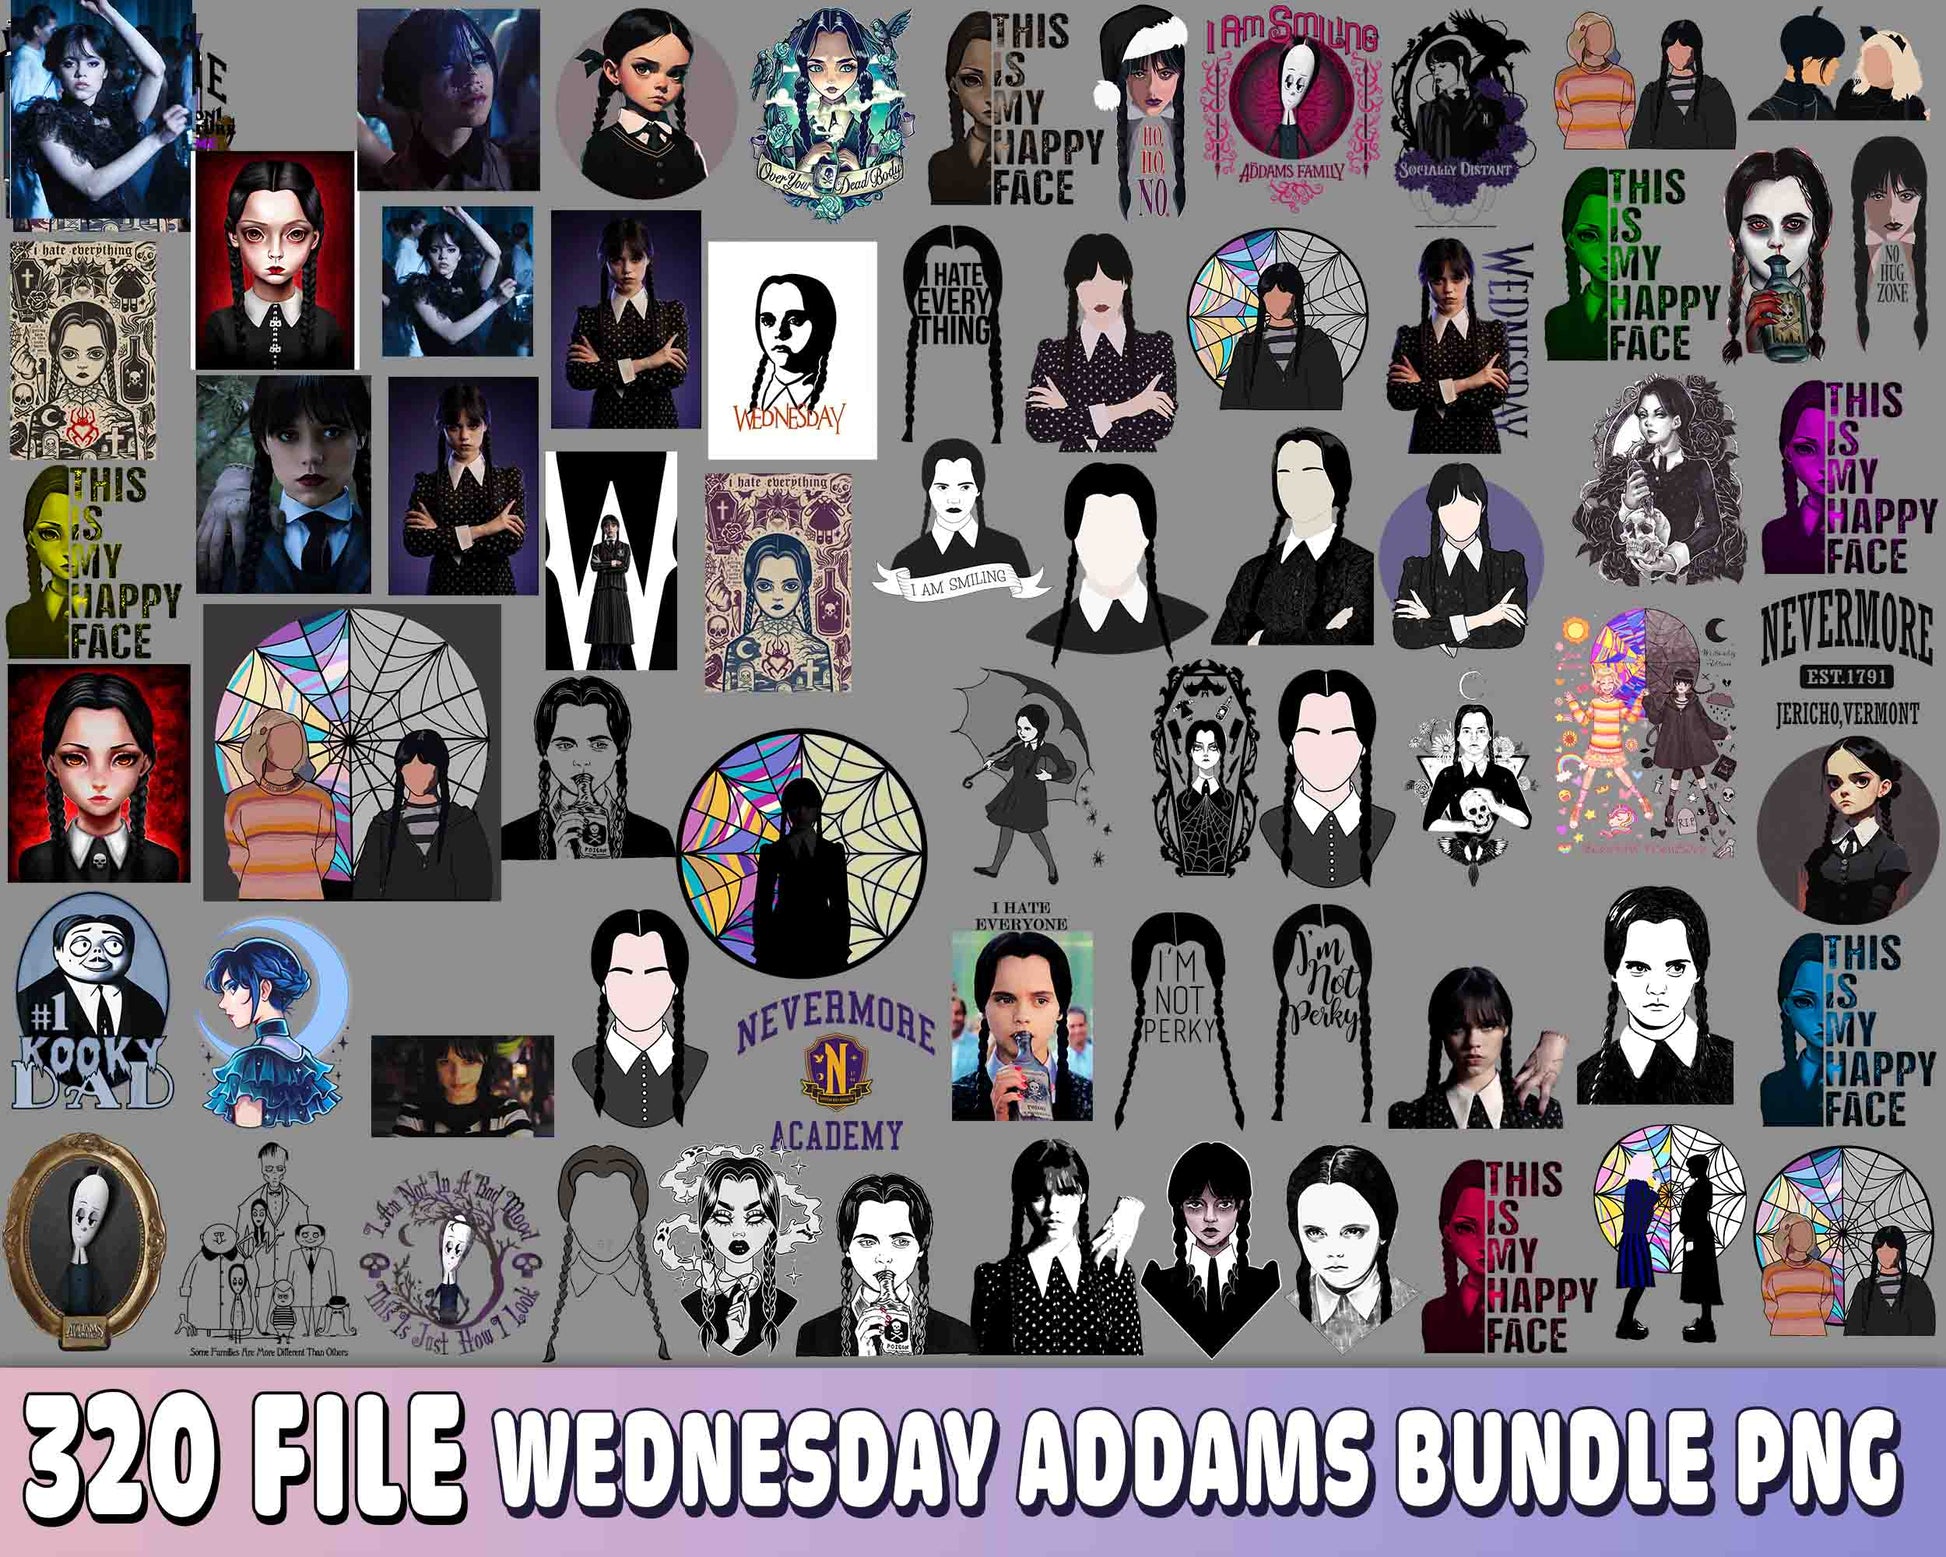 Wednesday Addams bundle PNG, Netflix series bundle PNG